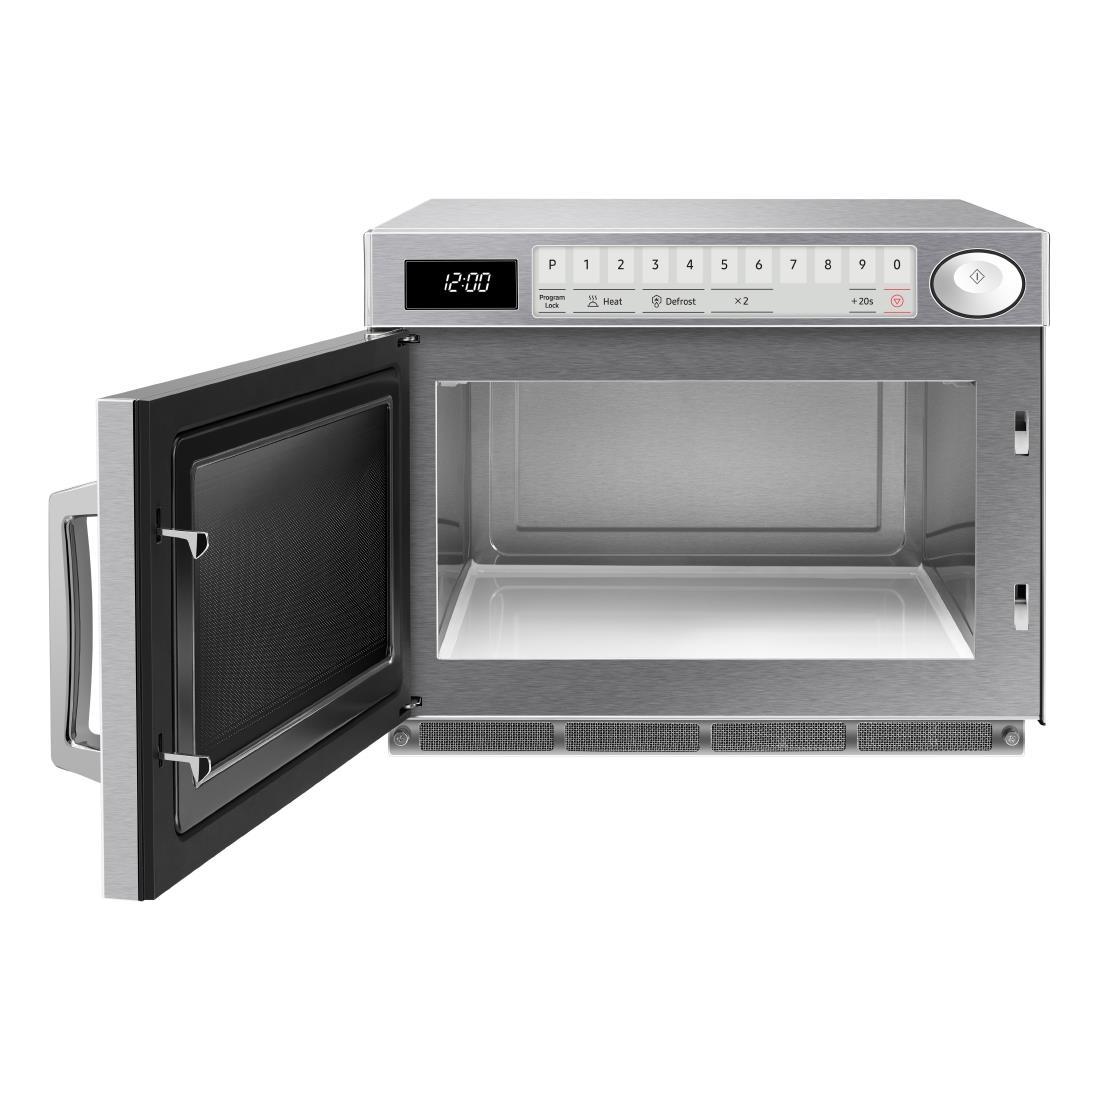 Samsung Commercial Microwave Digital 26Ltr 1500W - FS318  - 3